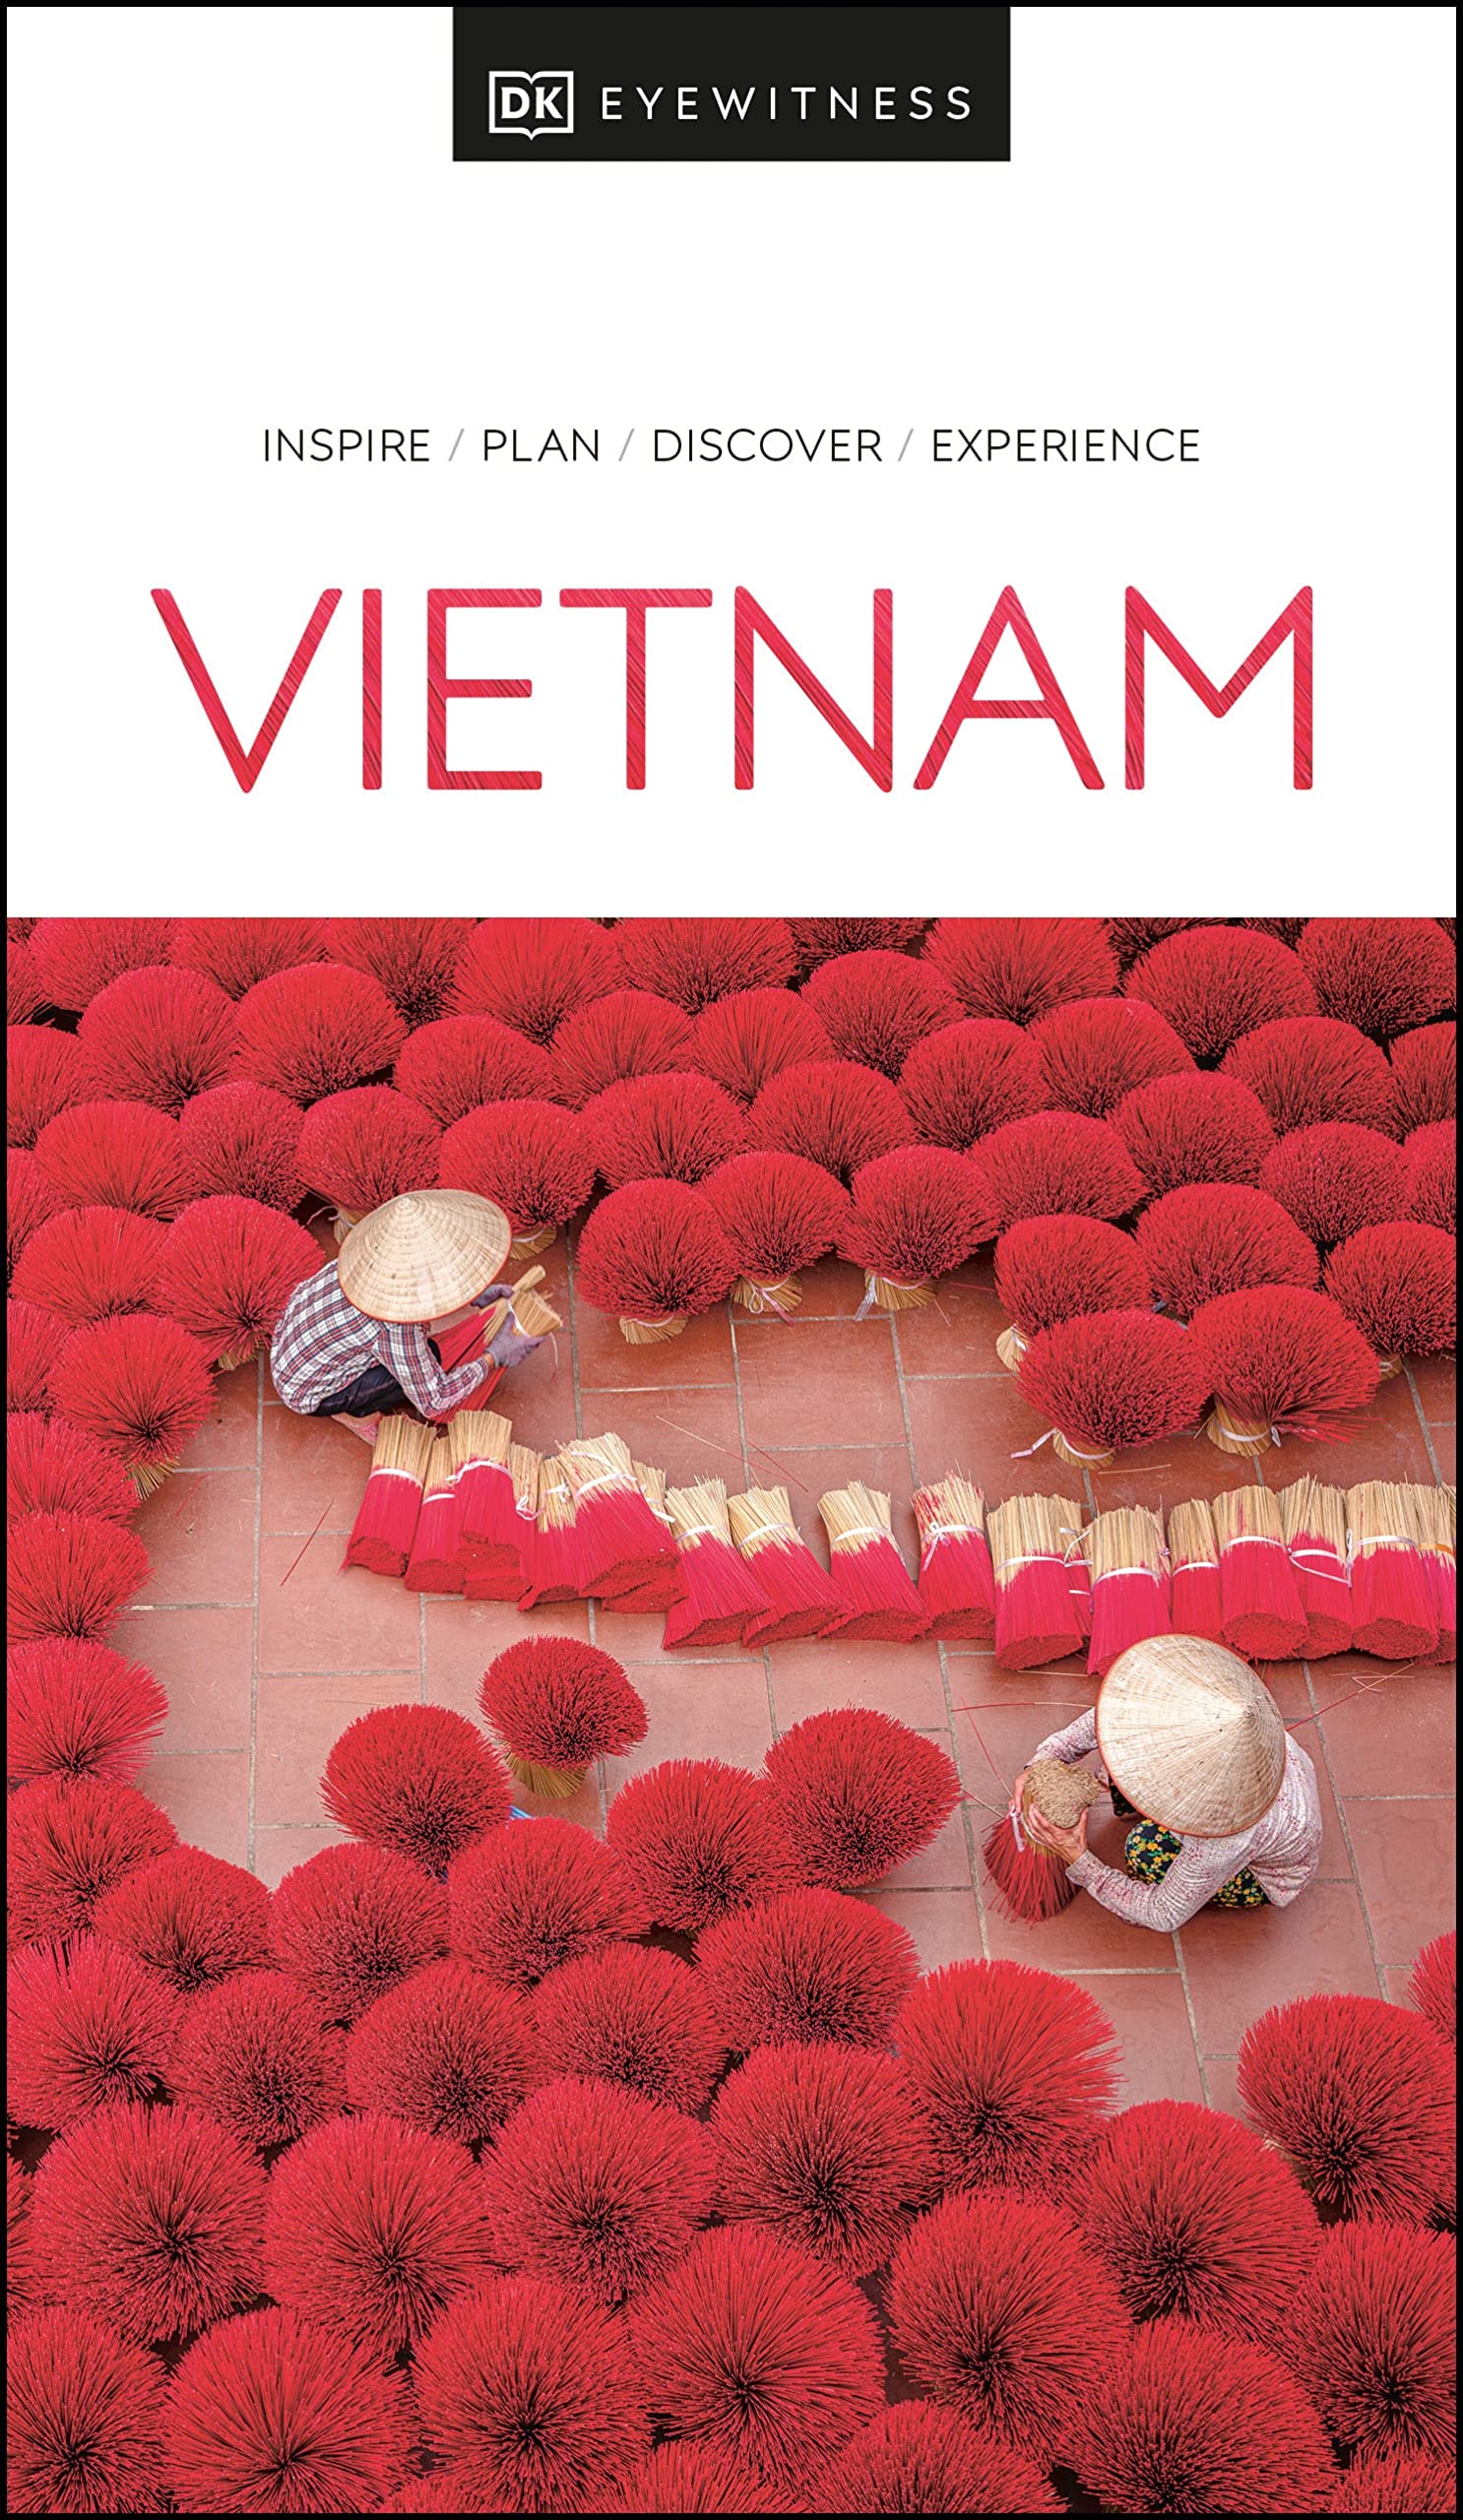 DK Eyewitness Vietnam |  image4